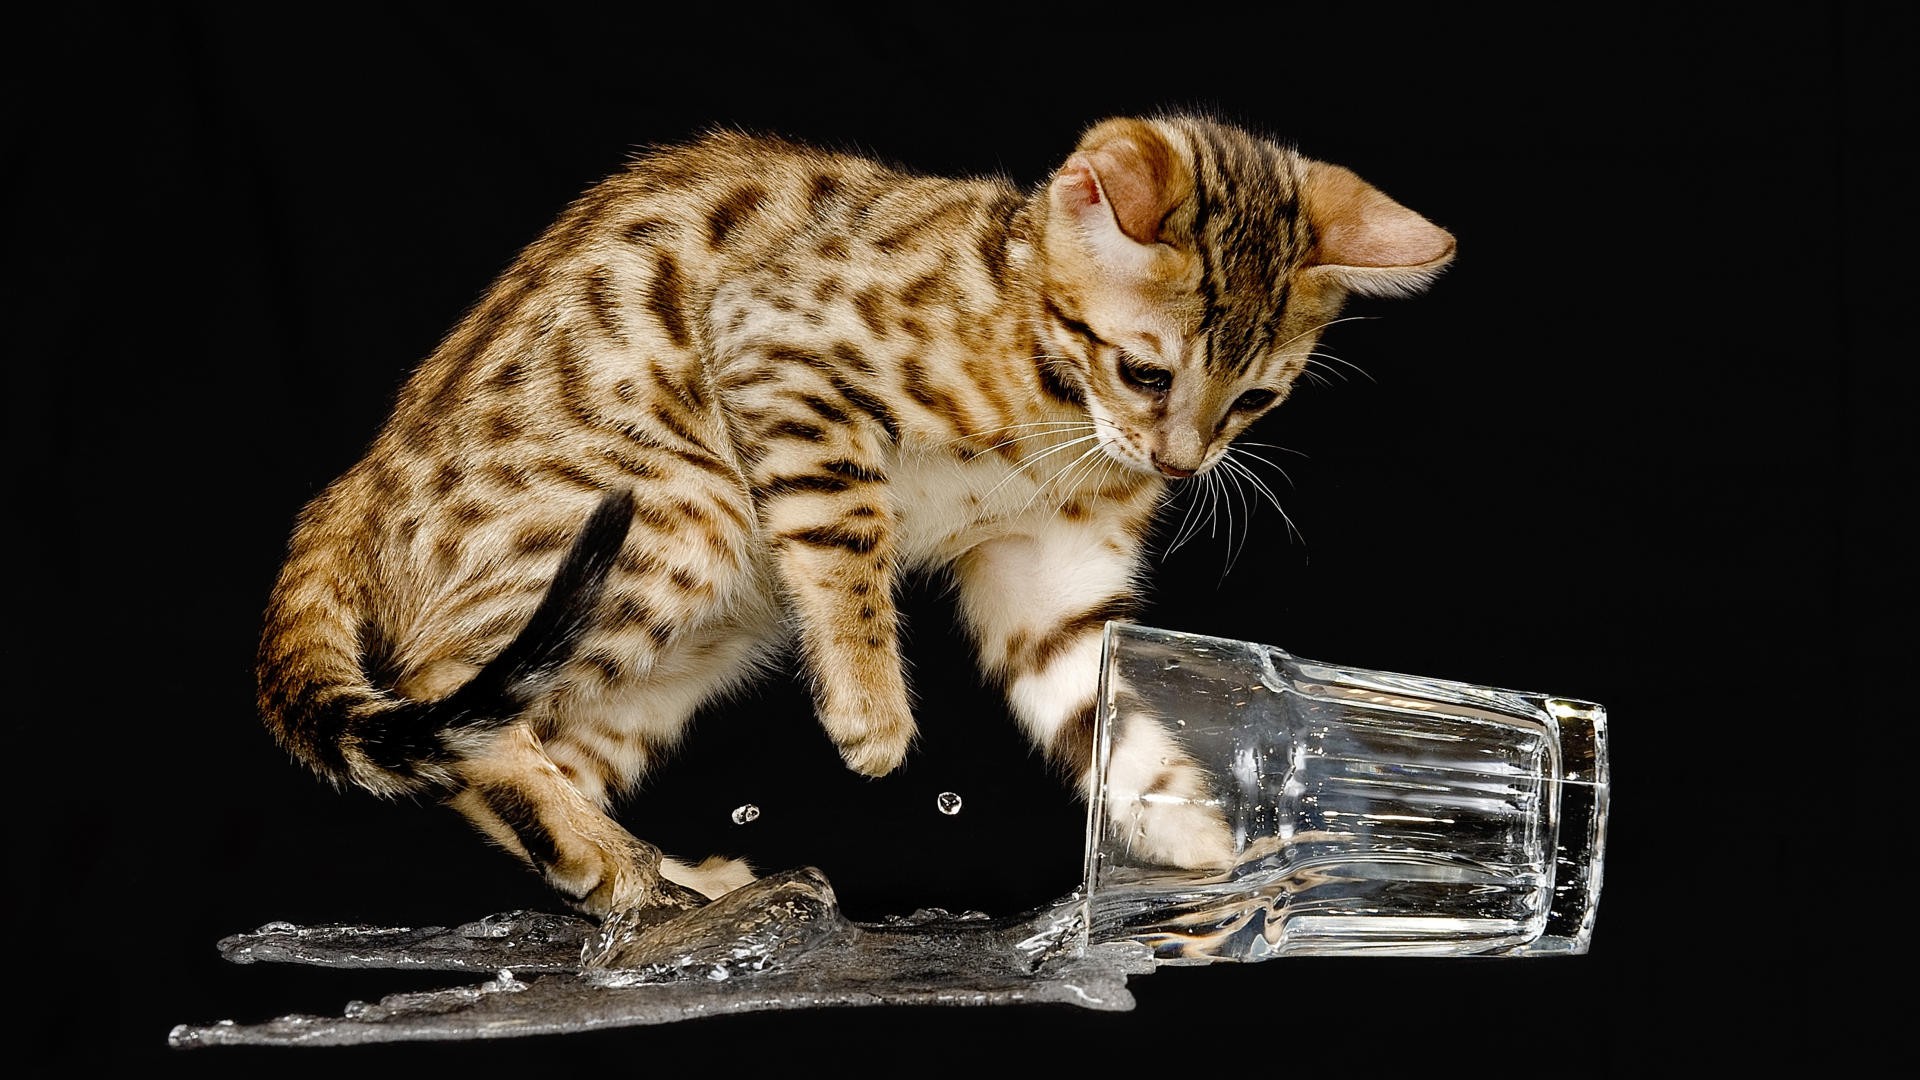 General 1920x1080 animals cats glass liquid mammals simple background black background drinking glass drinking problems feline